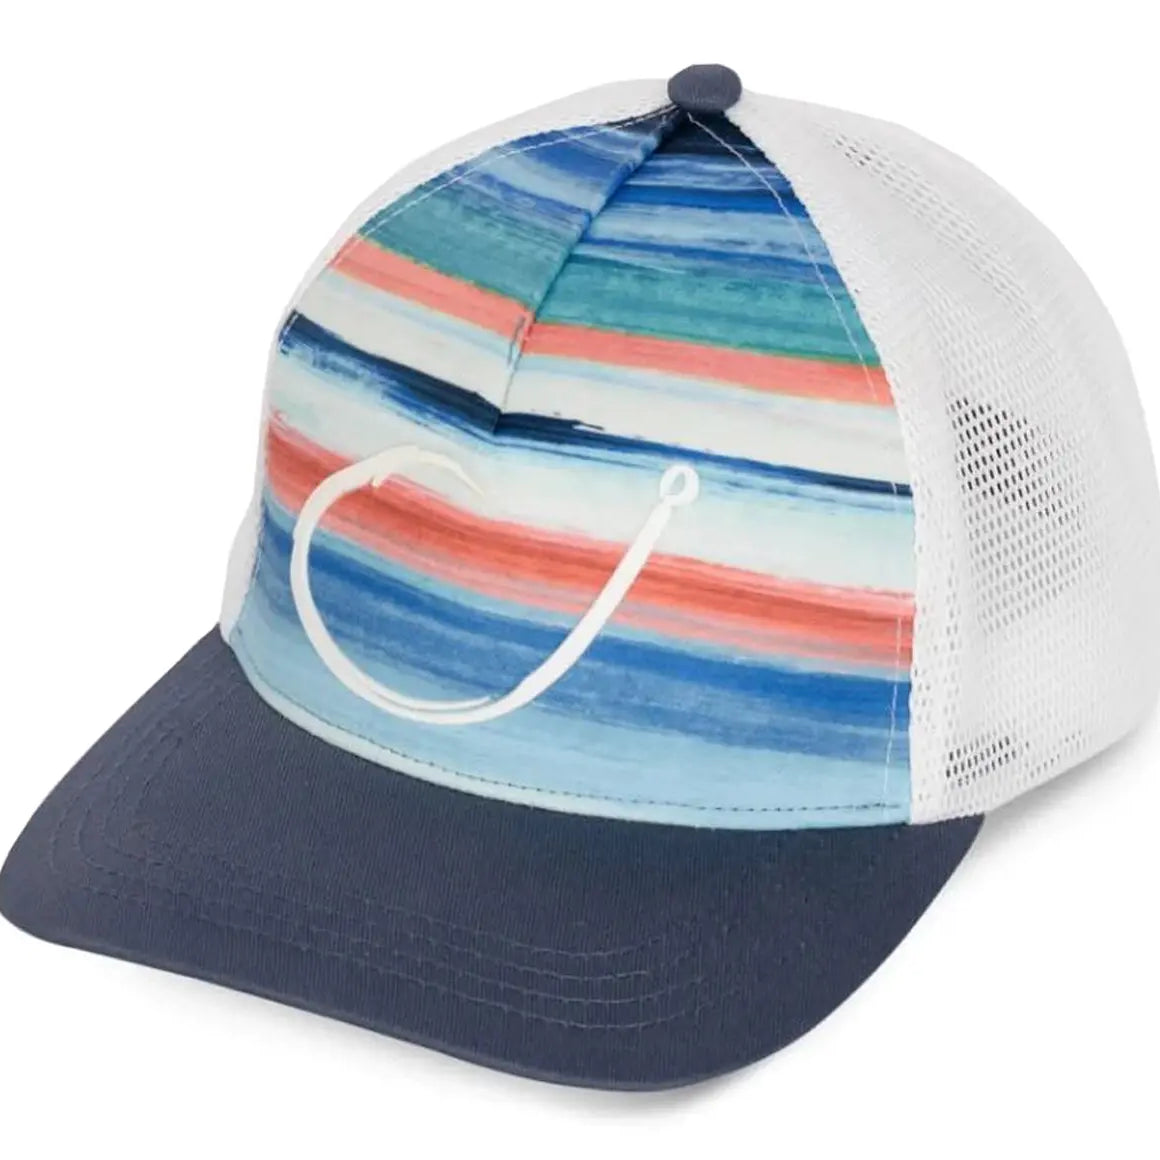 Reel Life Paint Stripes Snapback Hat - Real Teal Reel Life